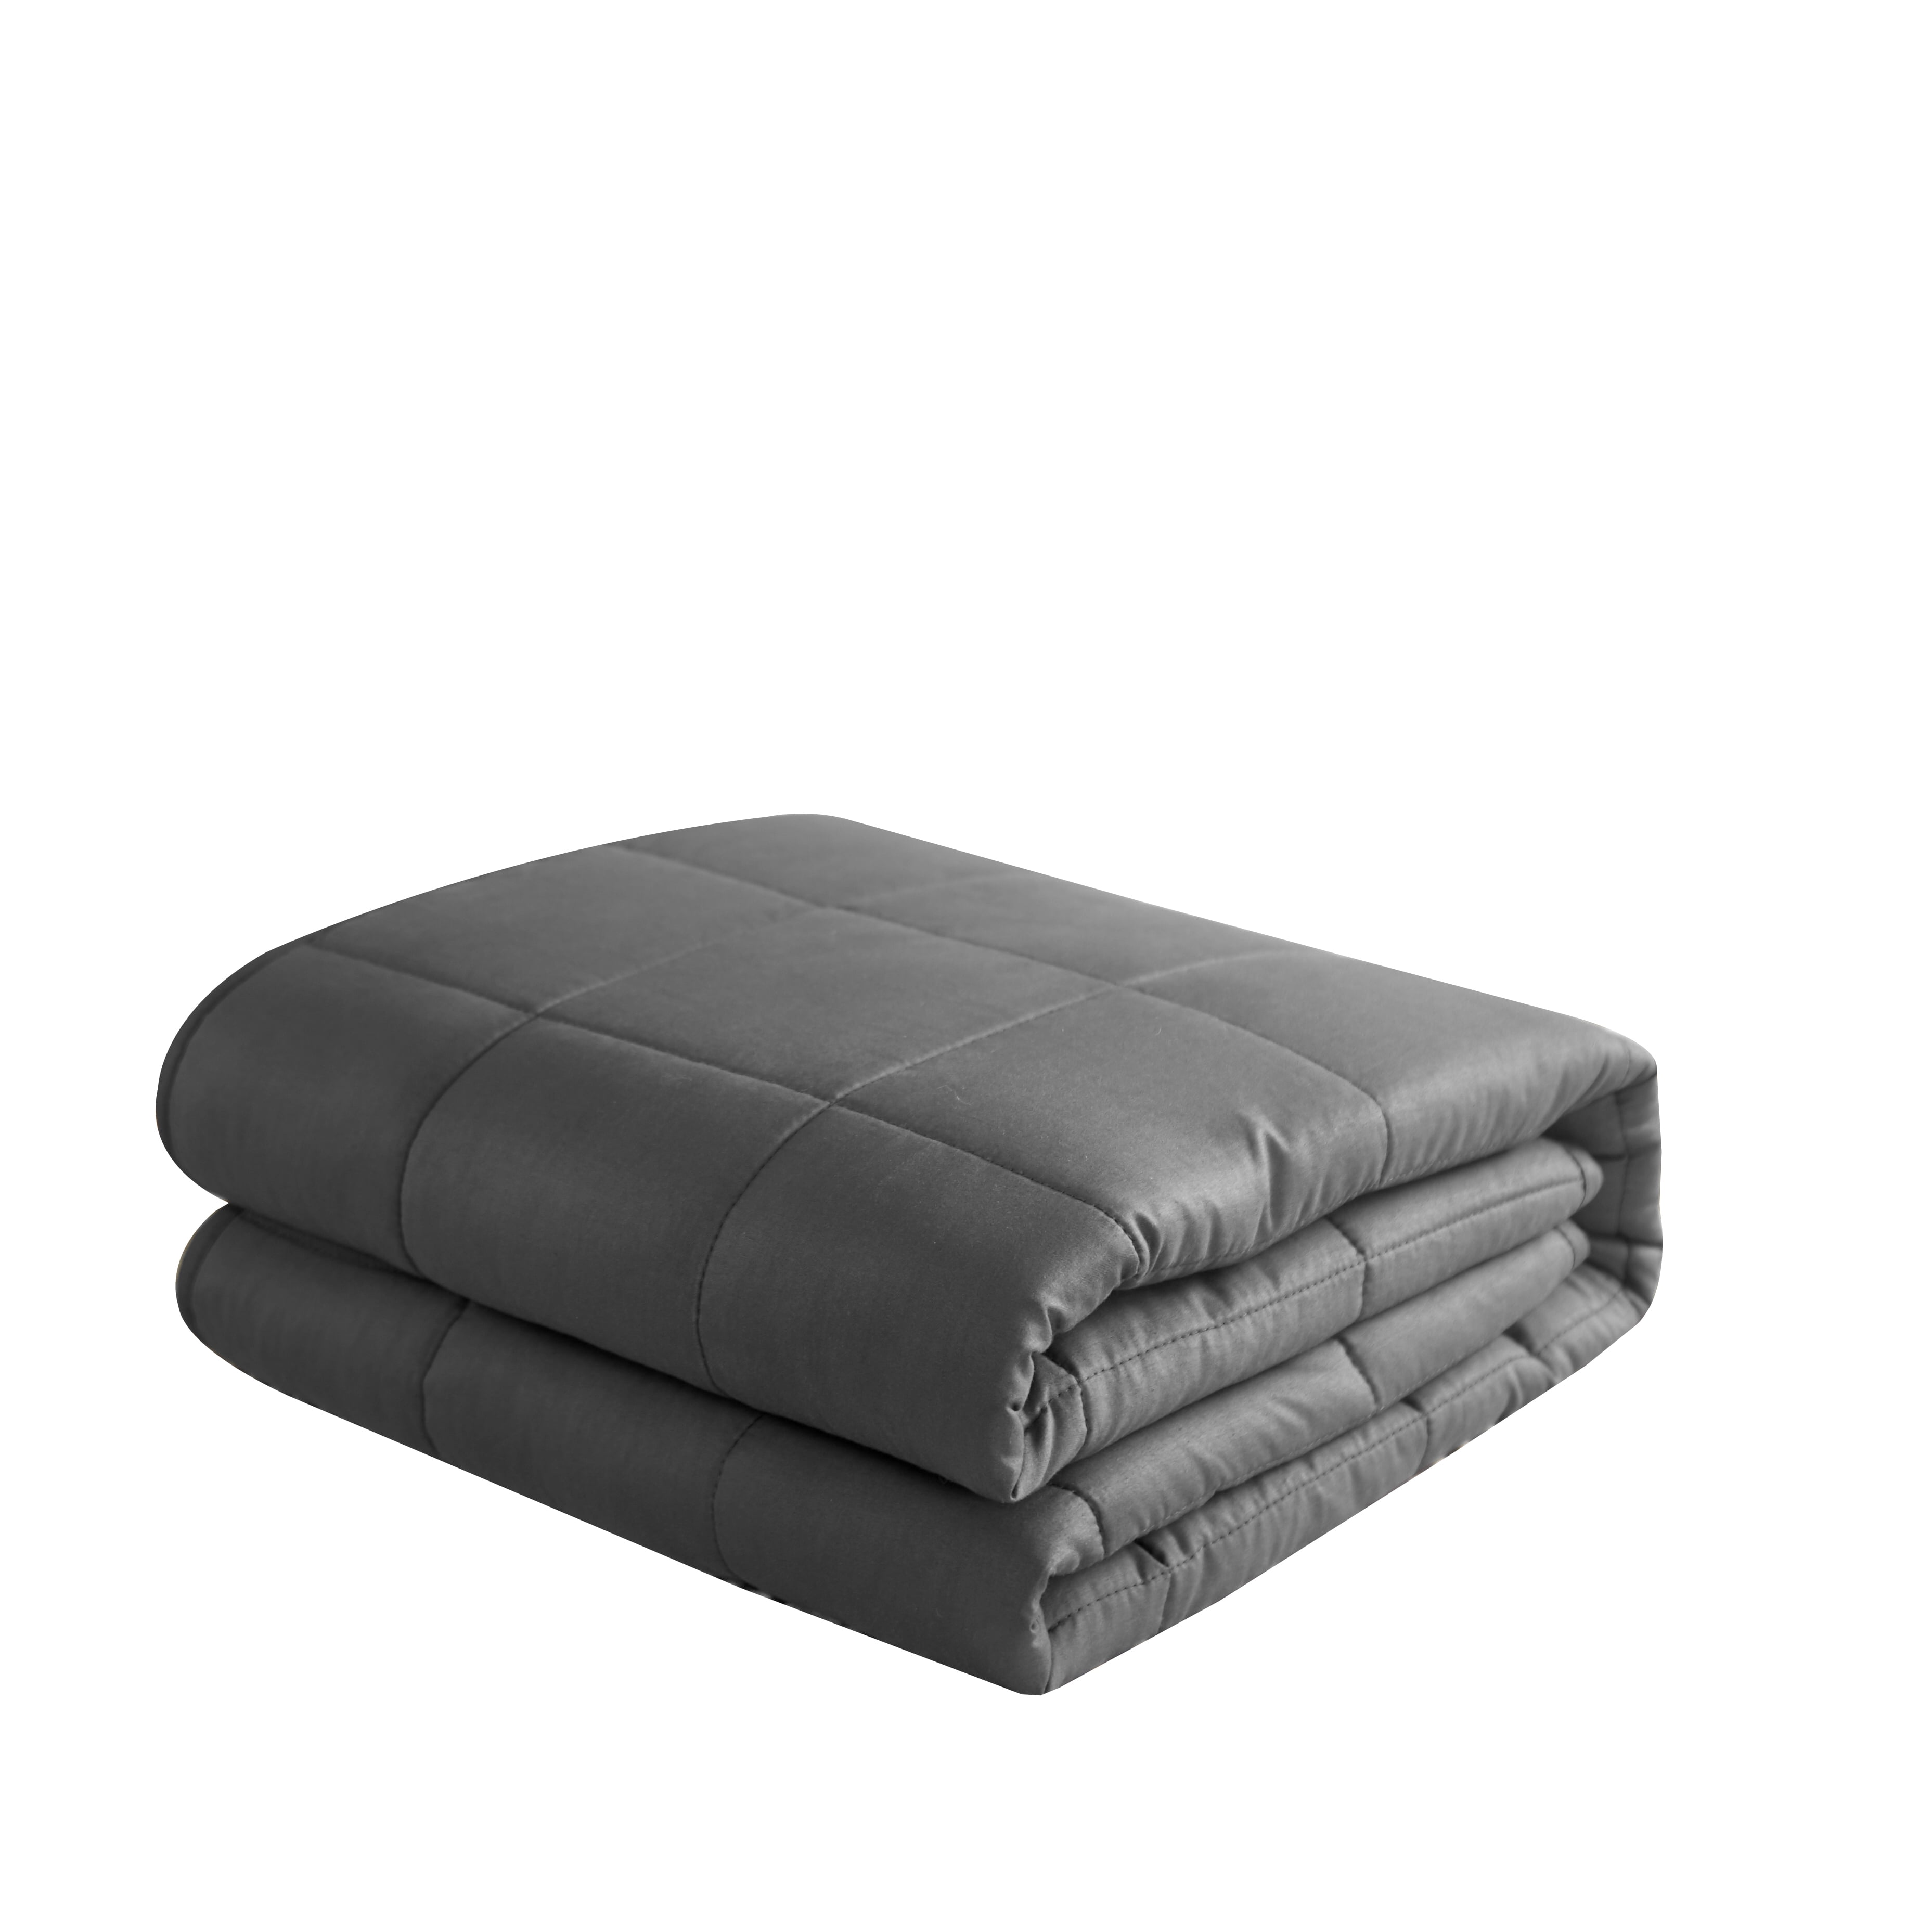 Weighted Idea Weighted Blanket 48" x 78" Dark Grey 20Lb 